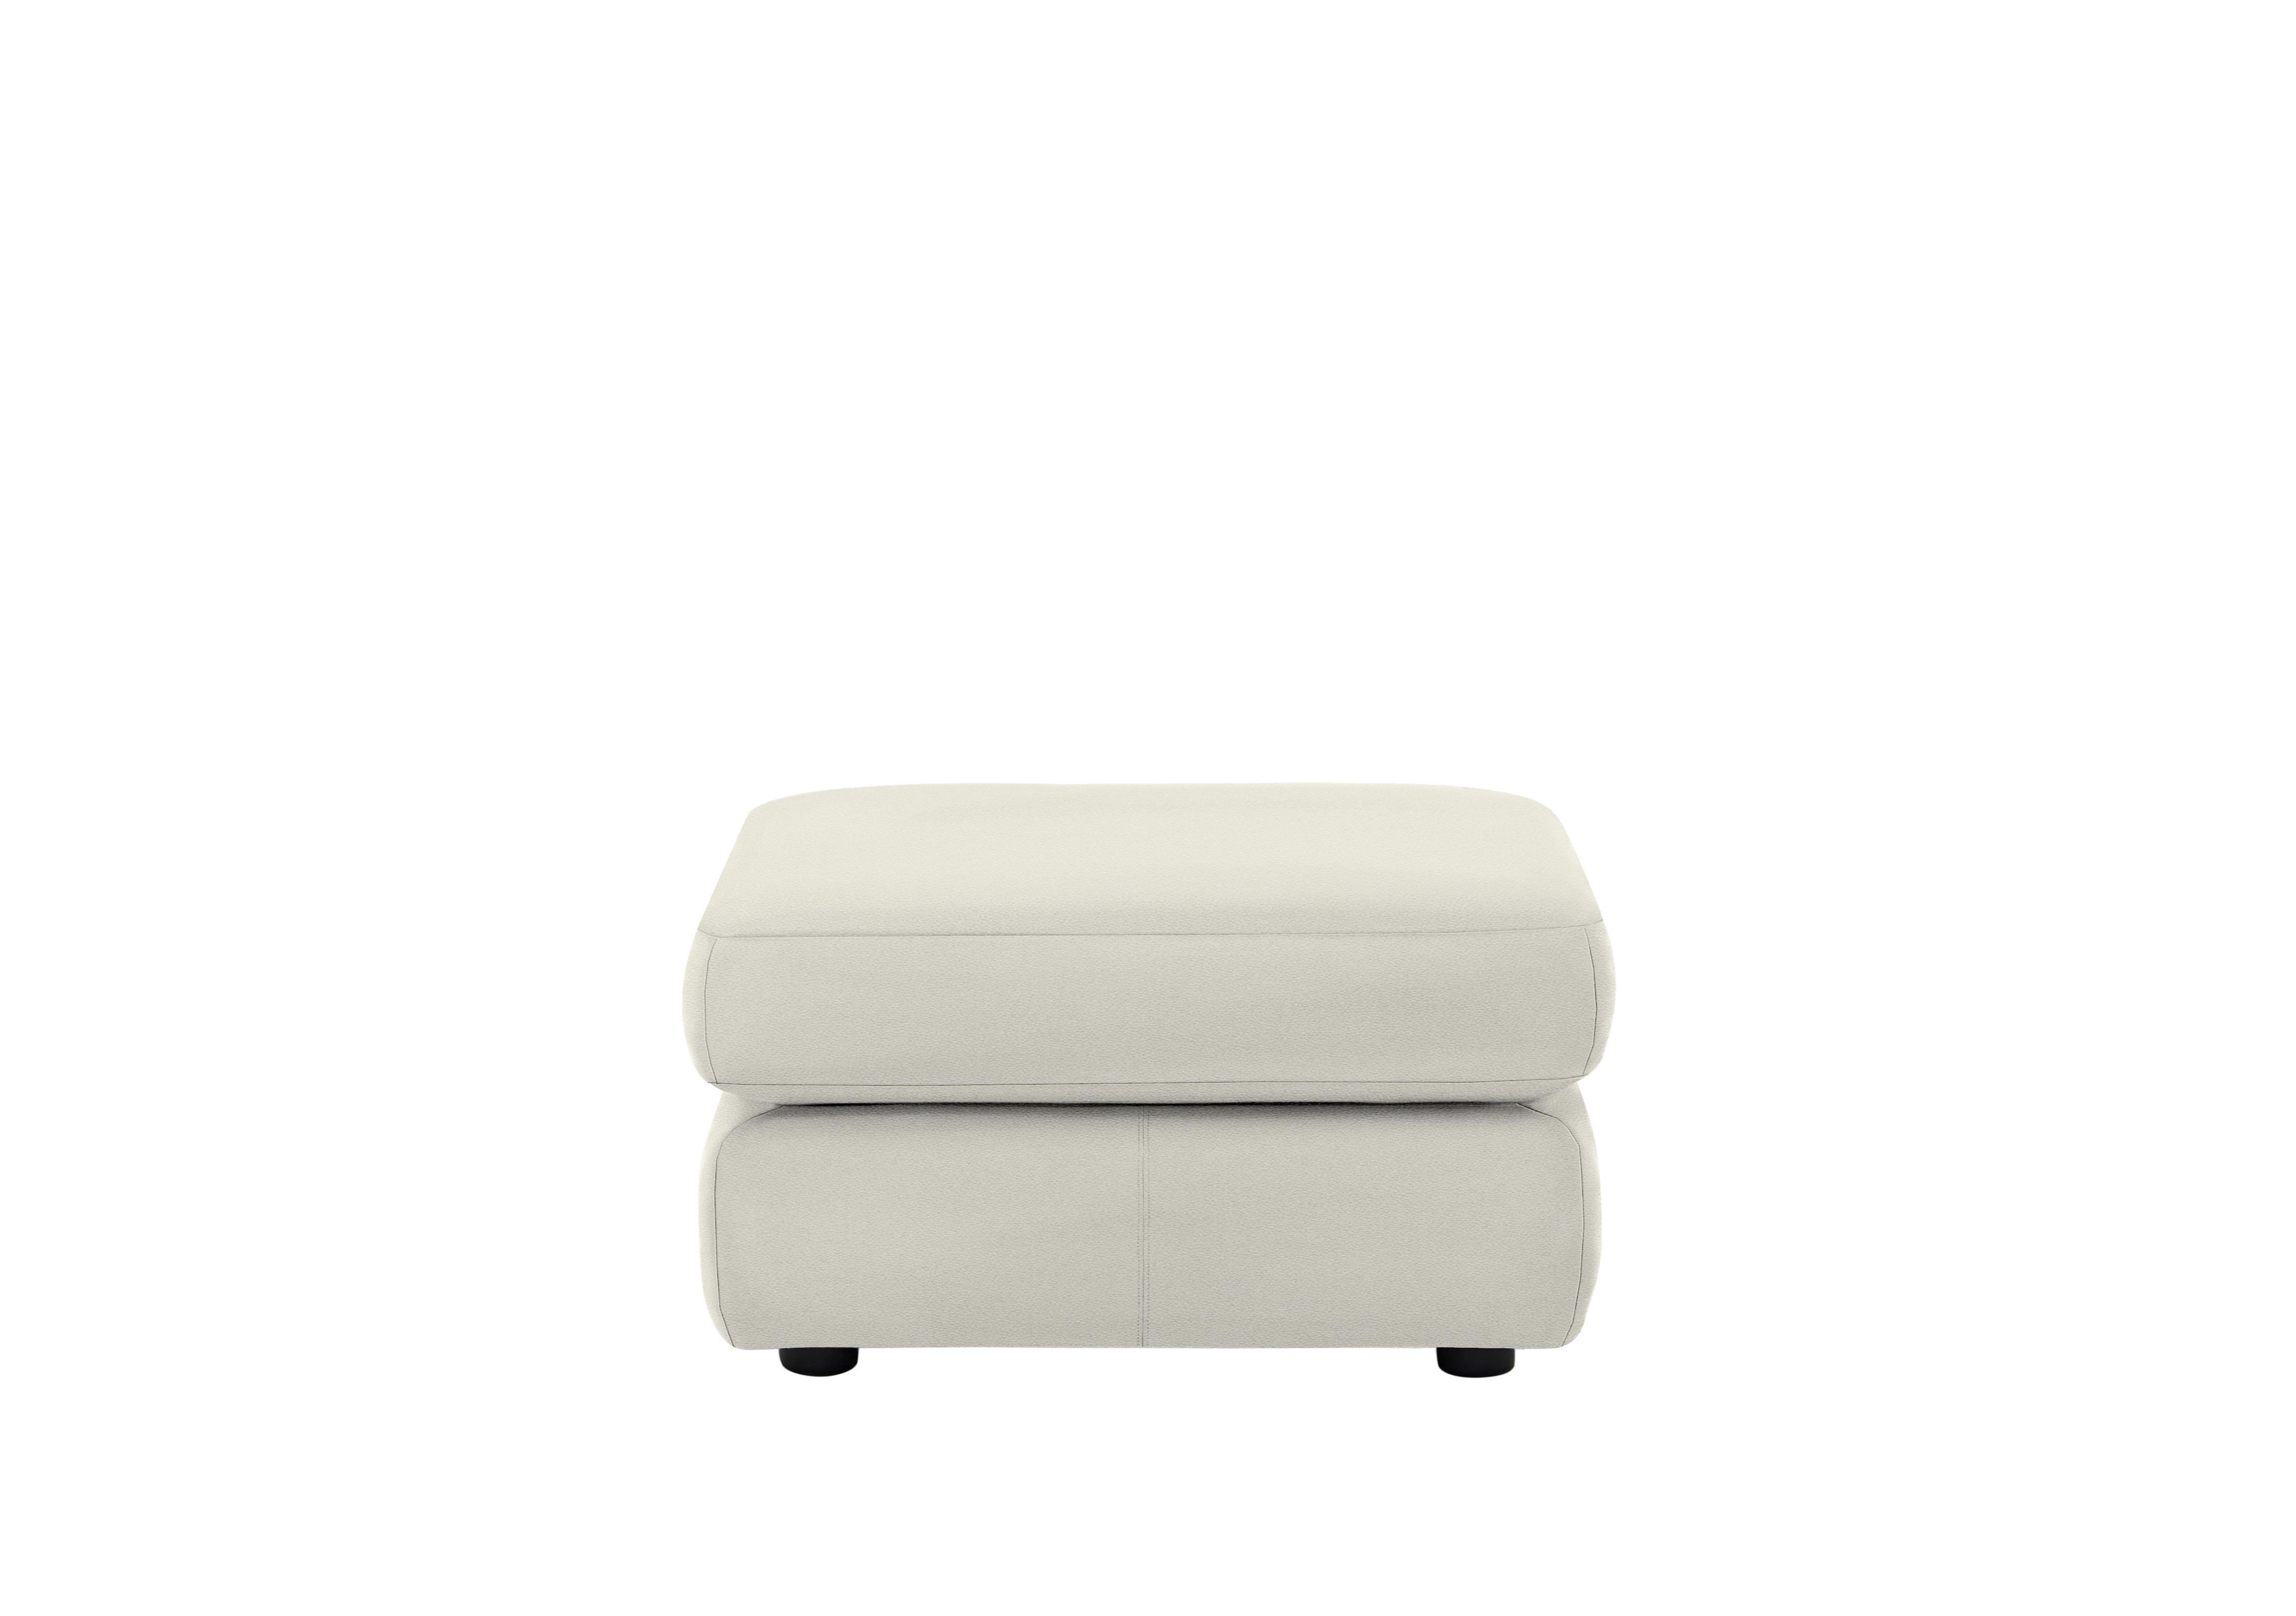 Avon Leather Storage Footstool in H006 Oxford Light Grey on Furniture Village